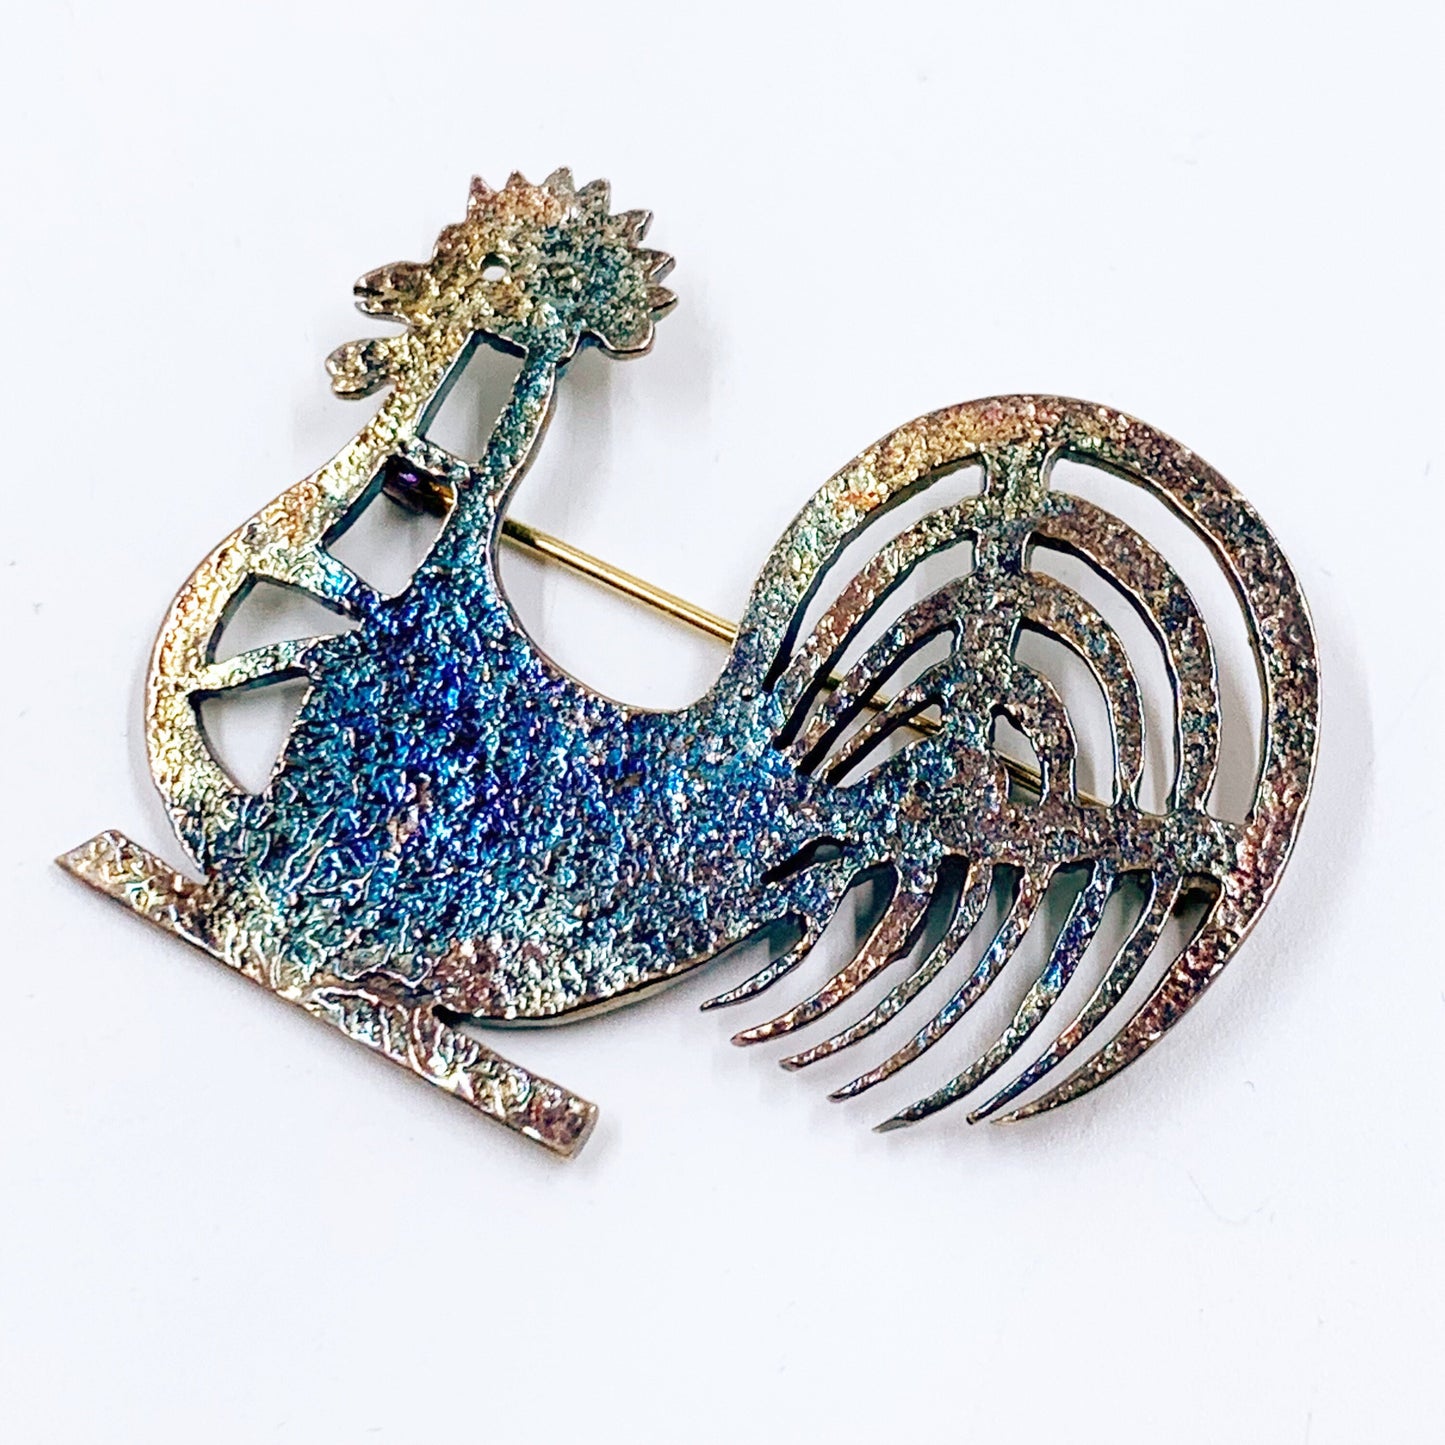 Vintage Silver Rooster Brooch | AARFAC Silver Rooster Pin